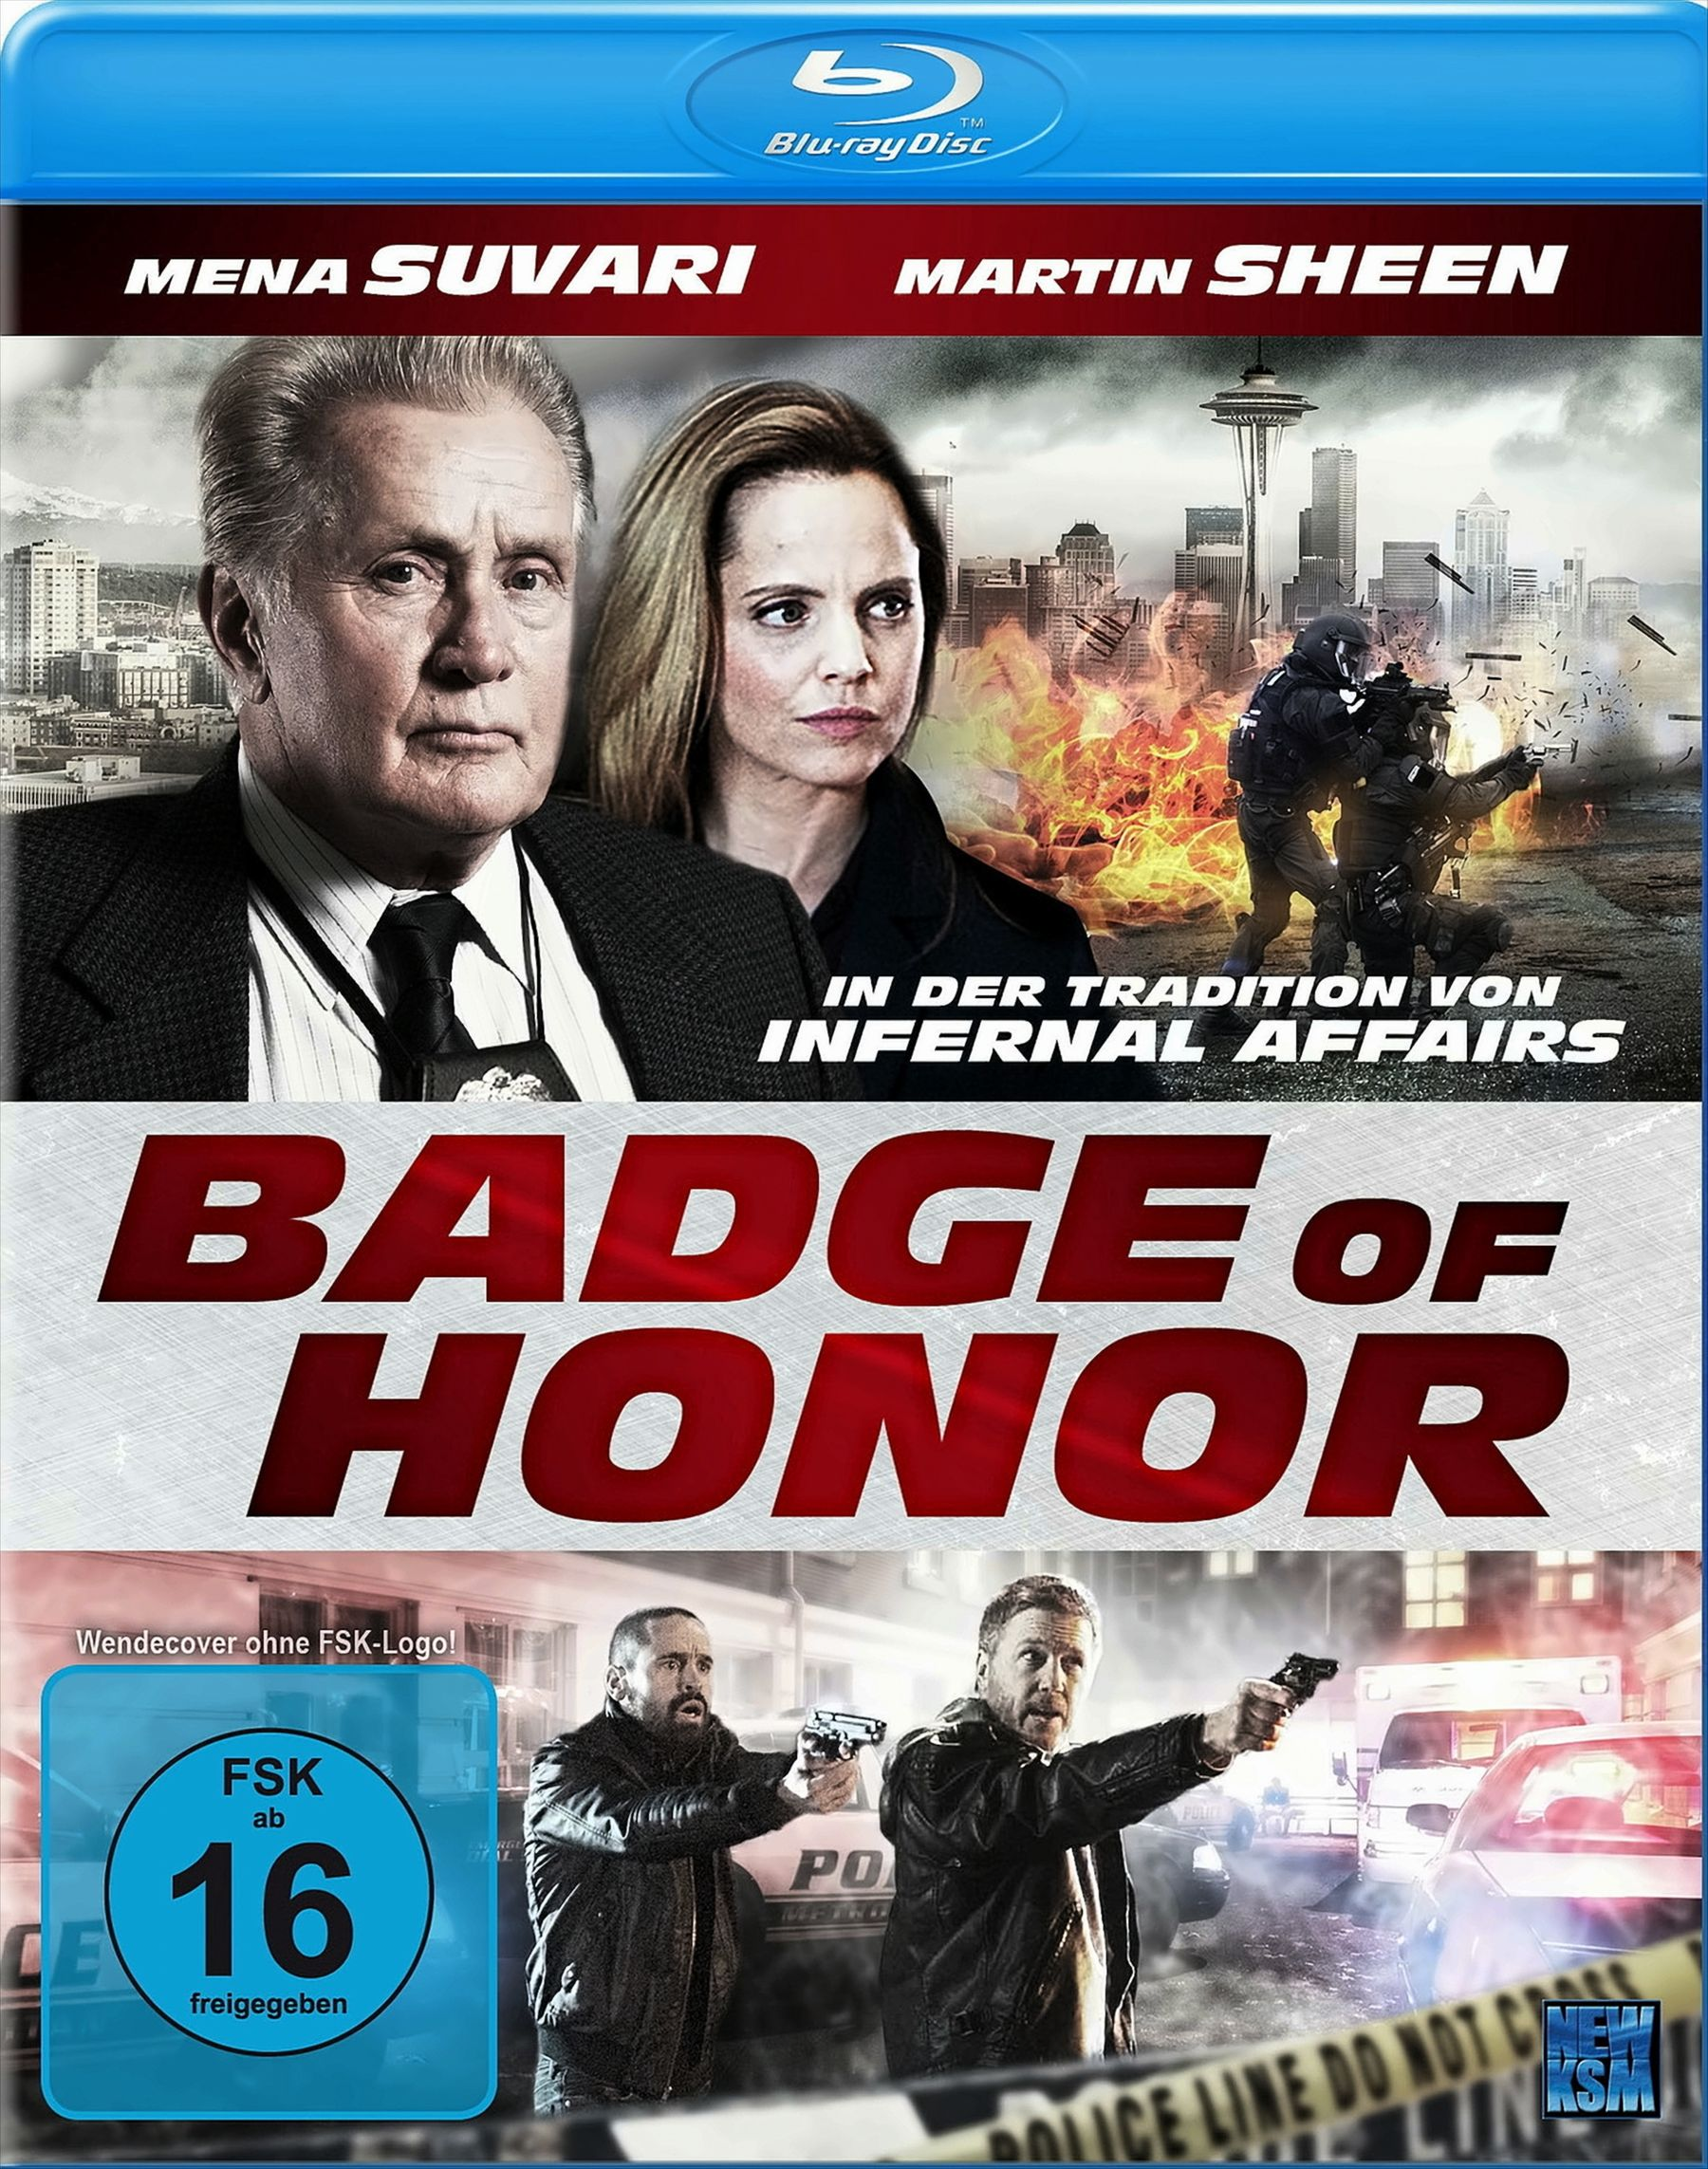 Honor of Badge Blu-ray